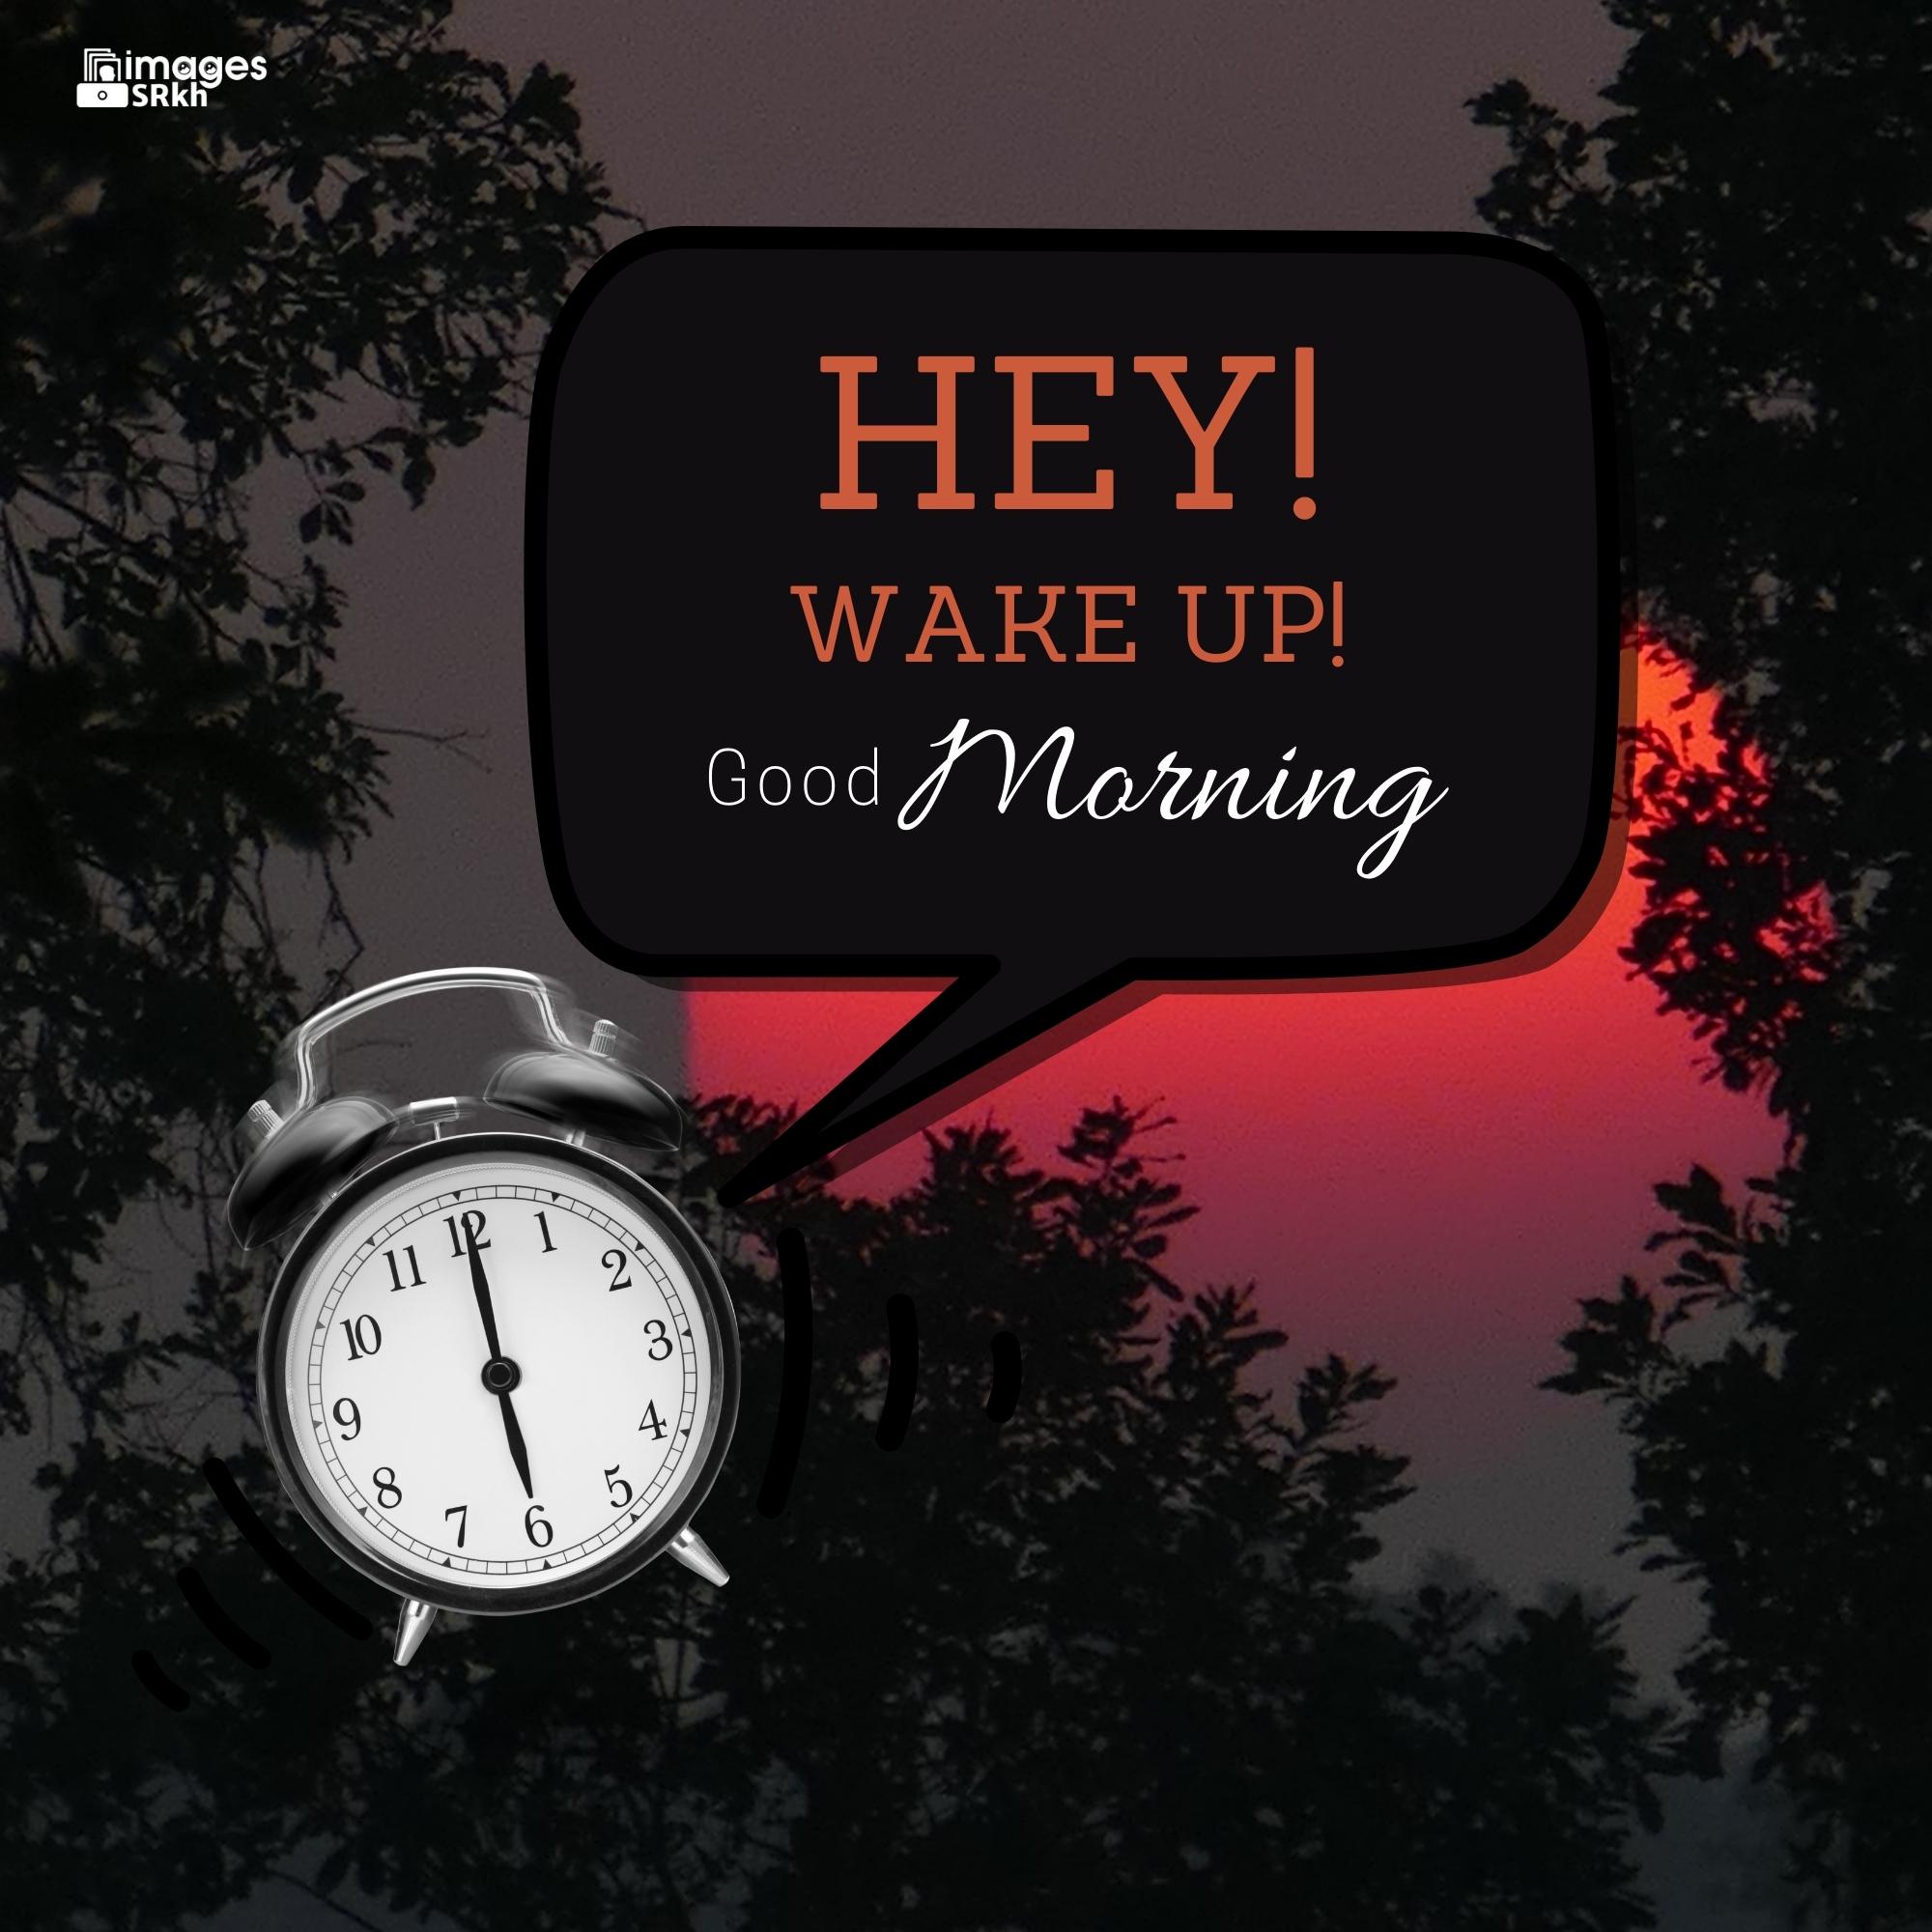 Good Morning Image with Alarm Clock